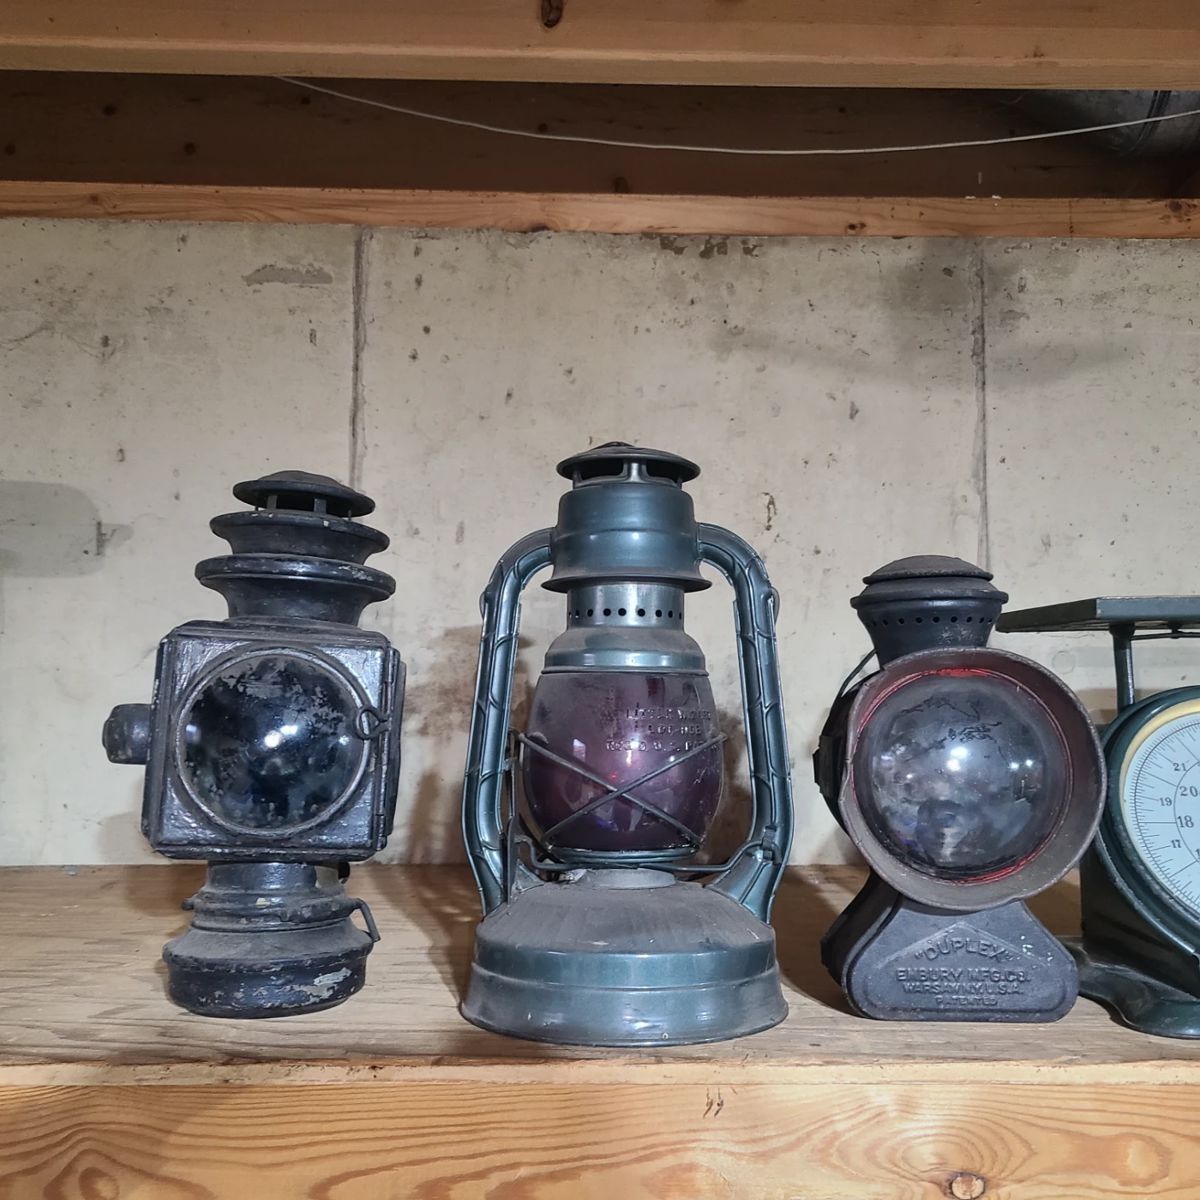 Vintage/Antique lanterns